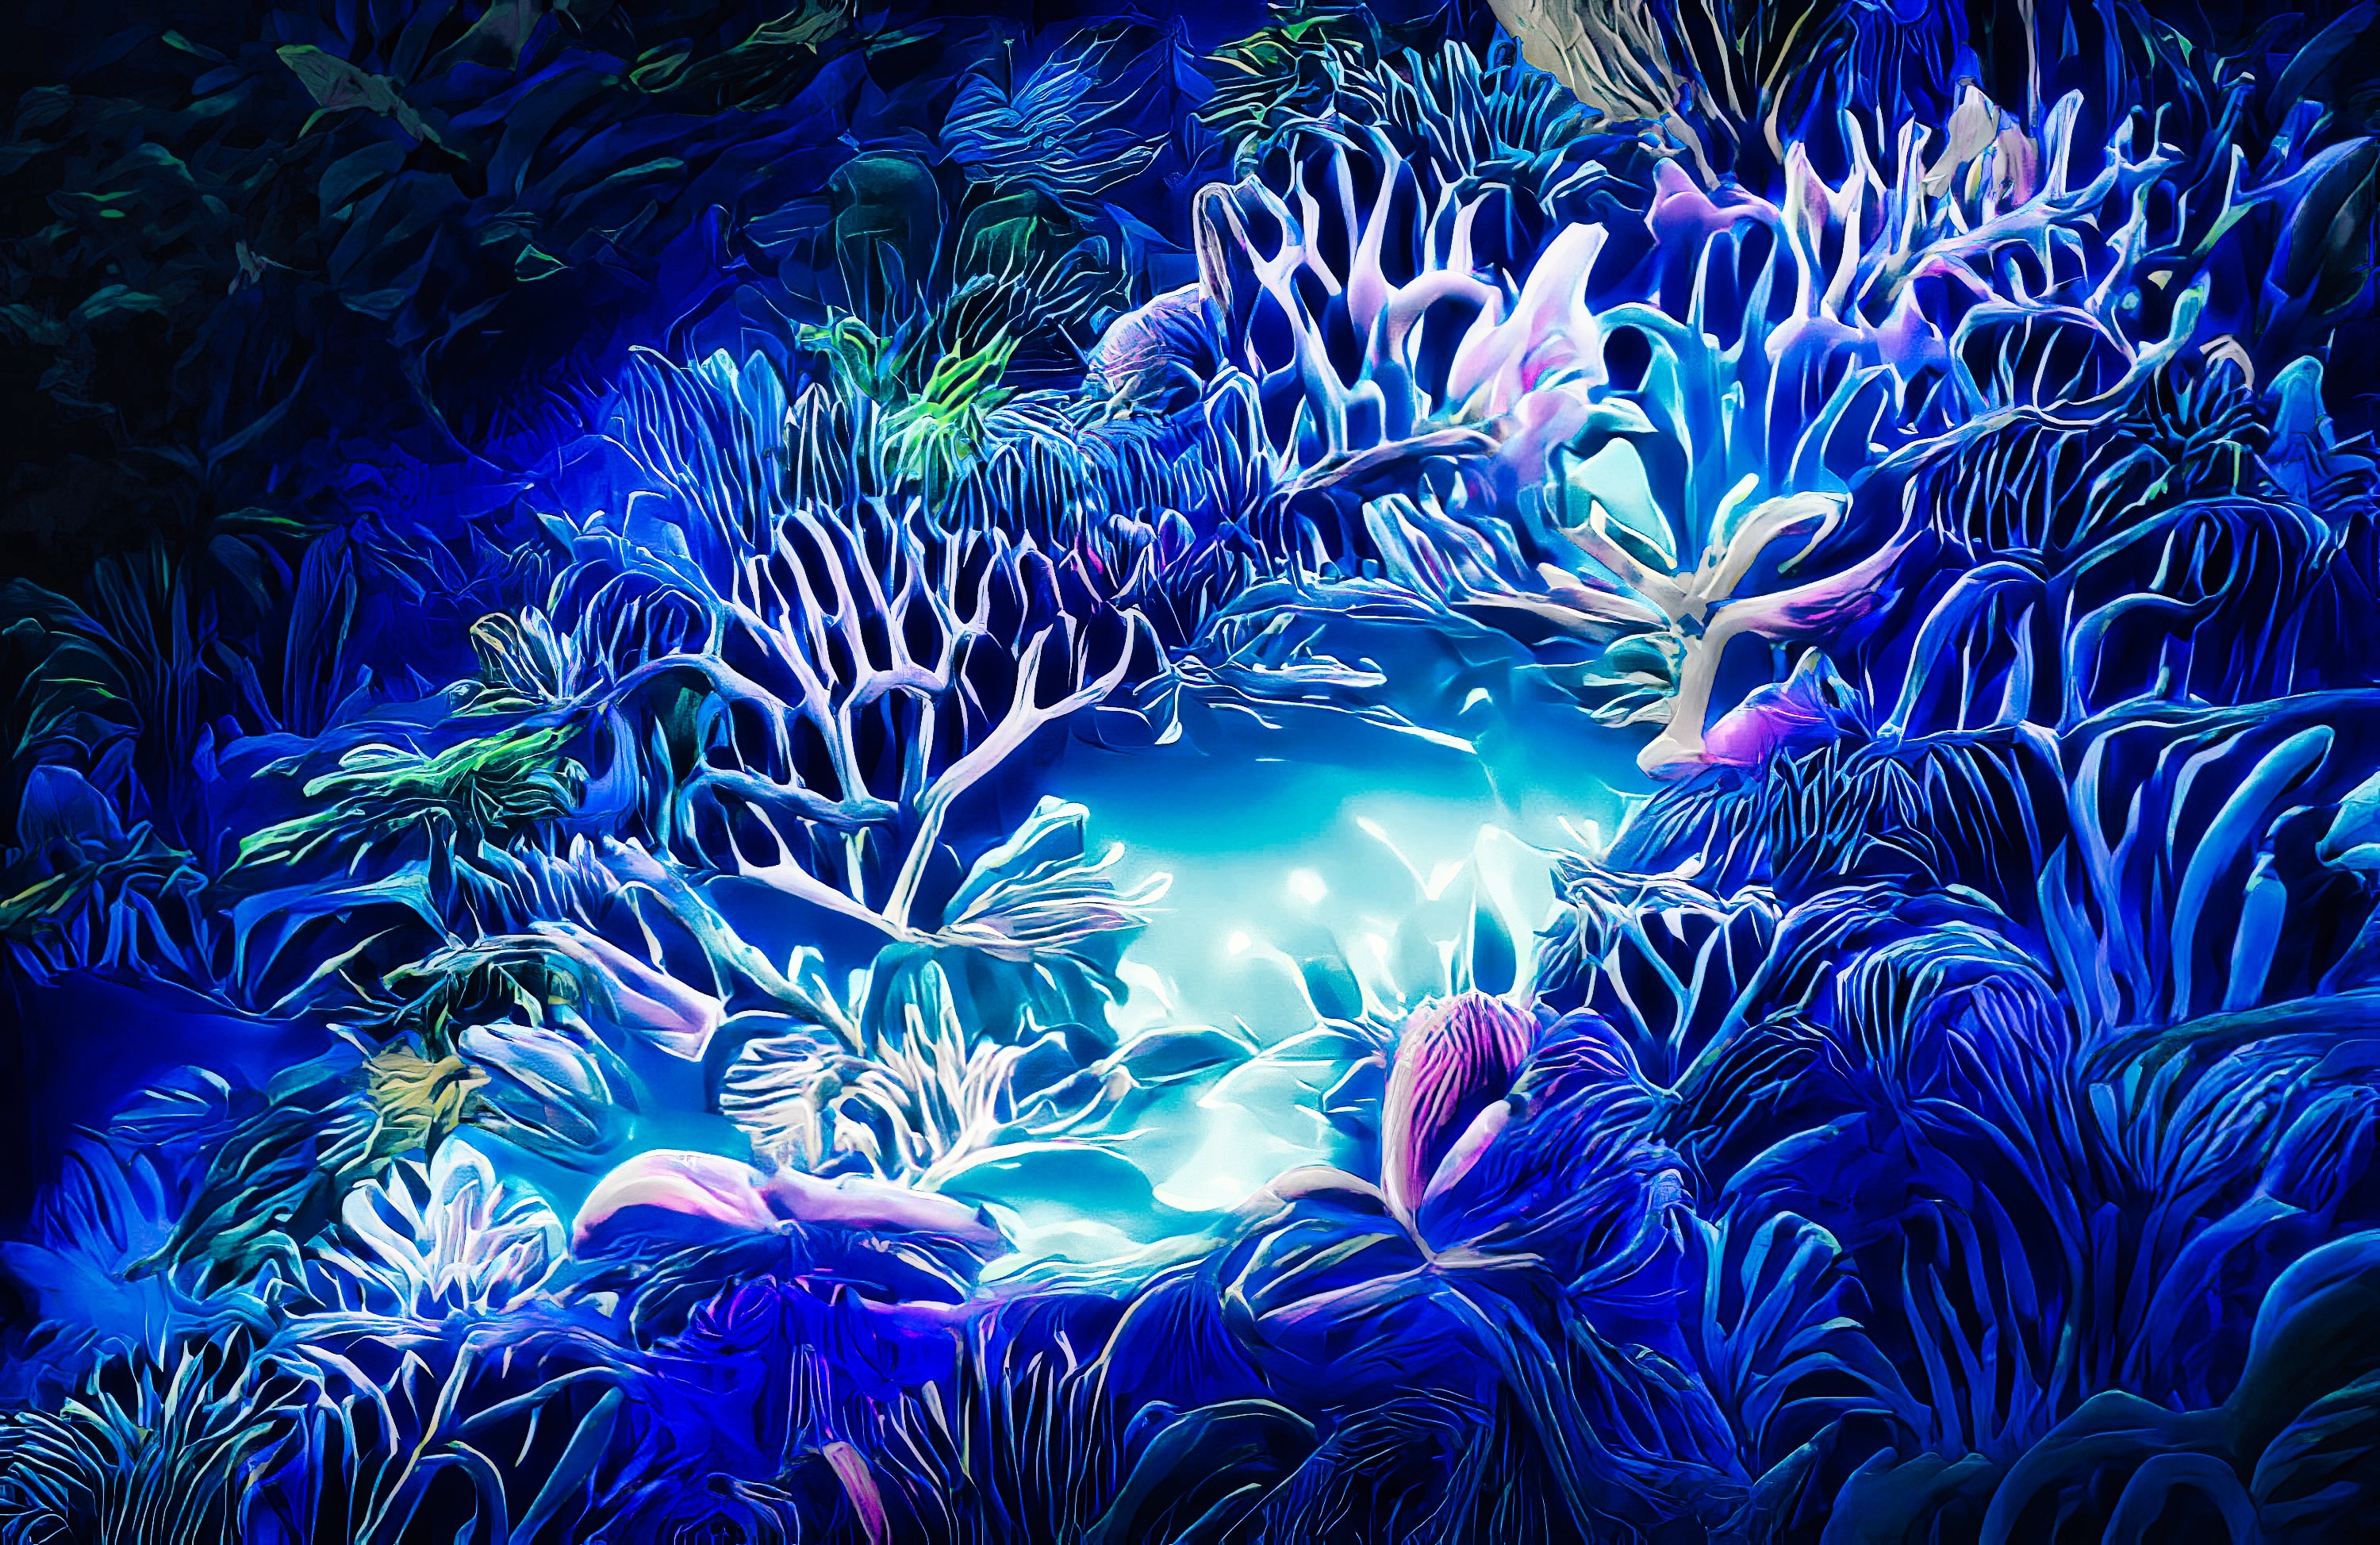 The Corals Genesis #159